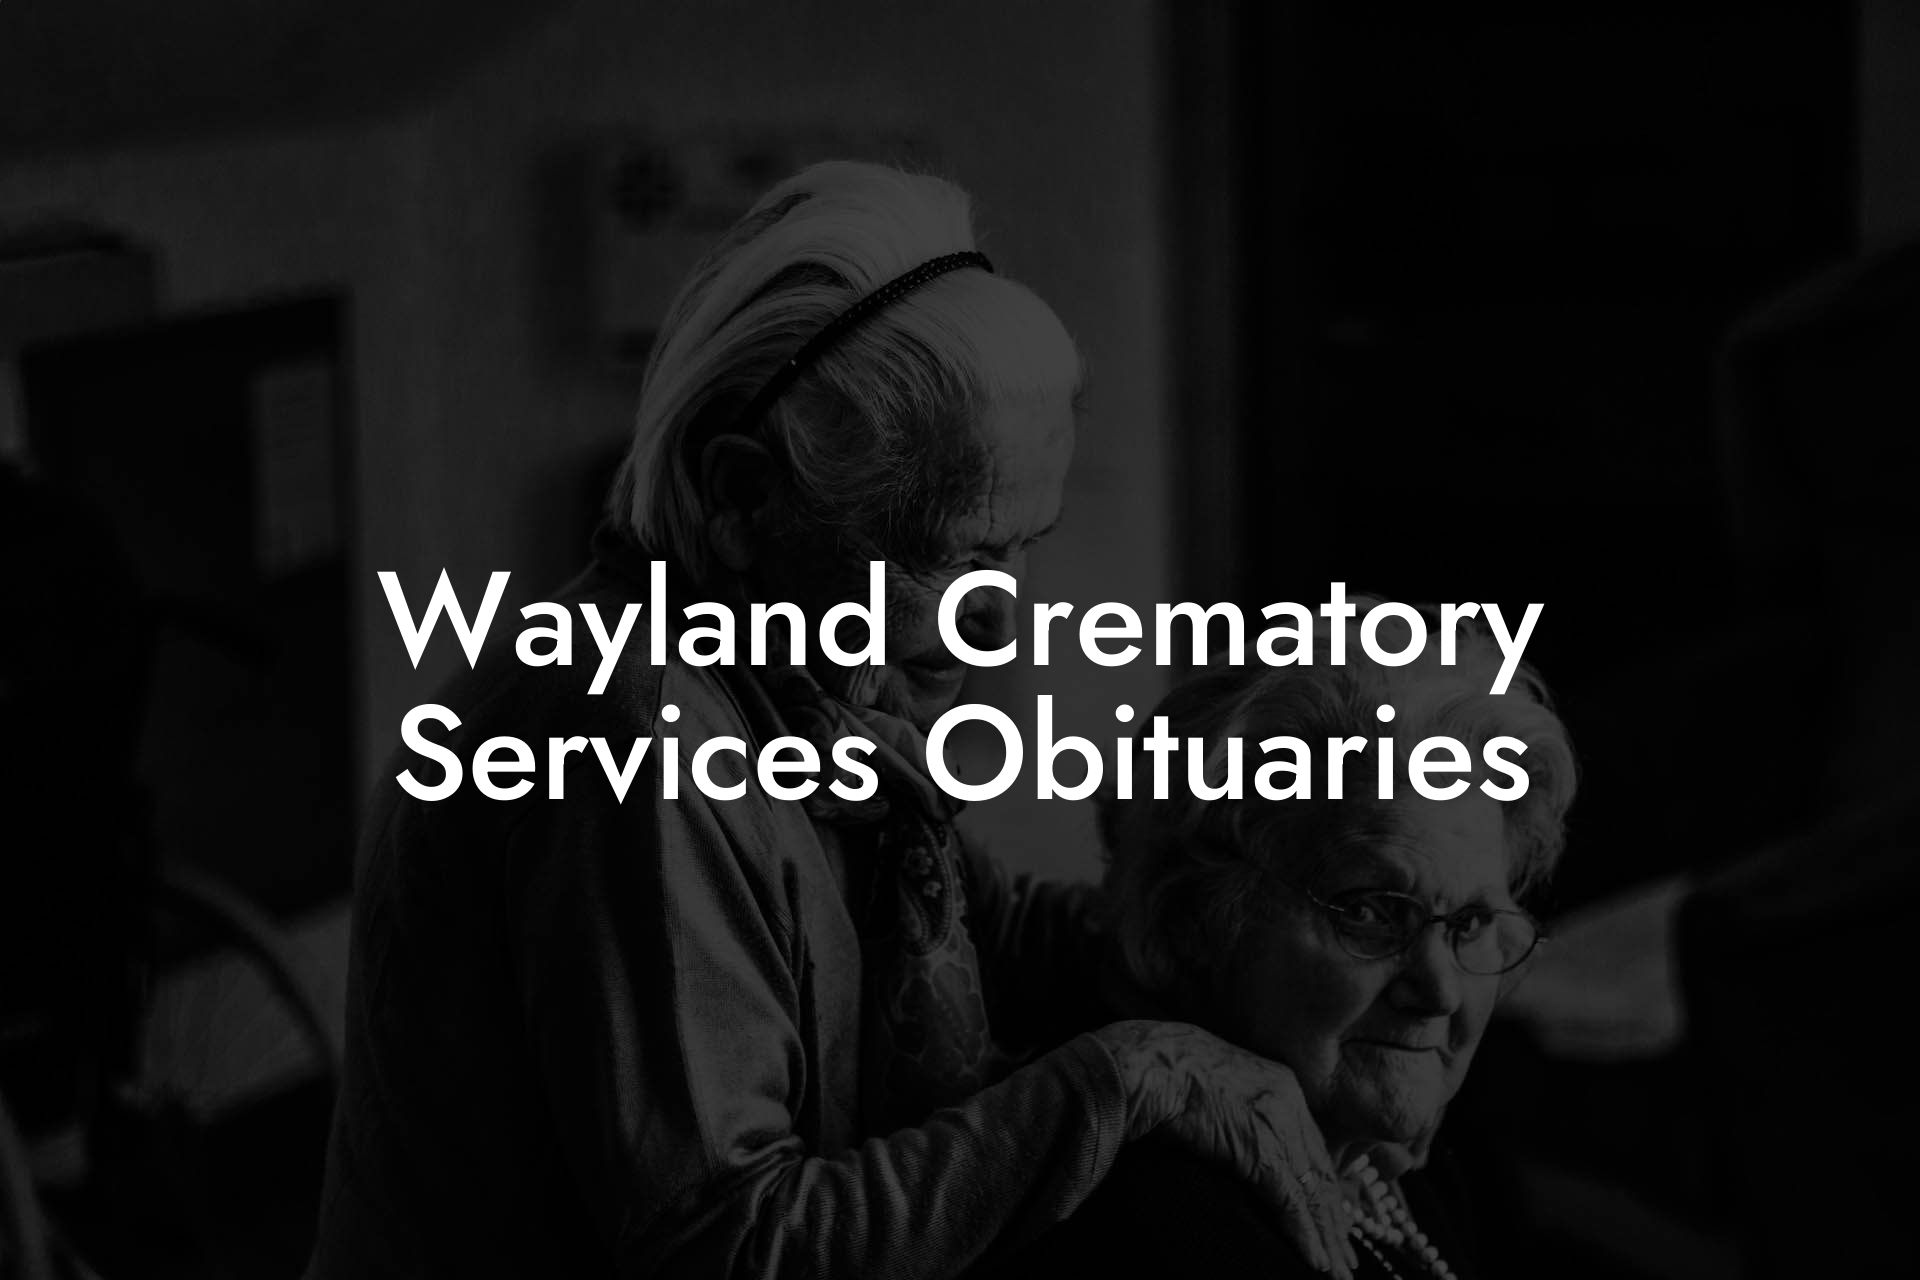 Wayland Crematory Services Obituaries